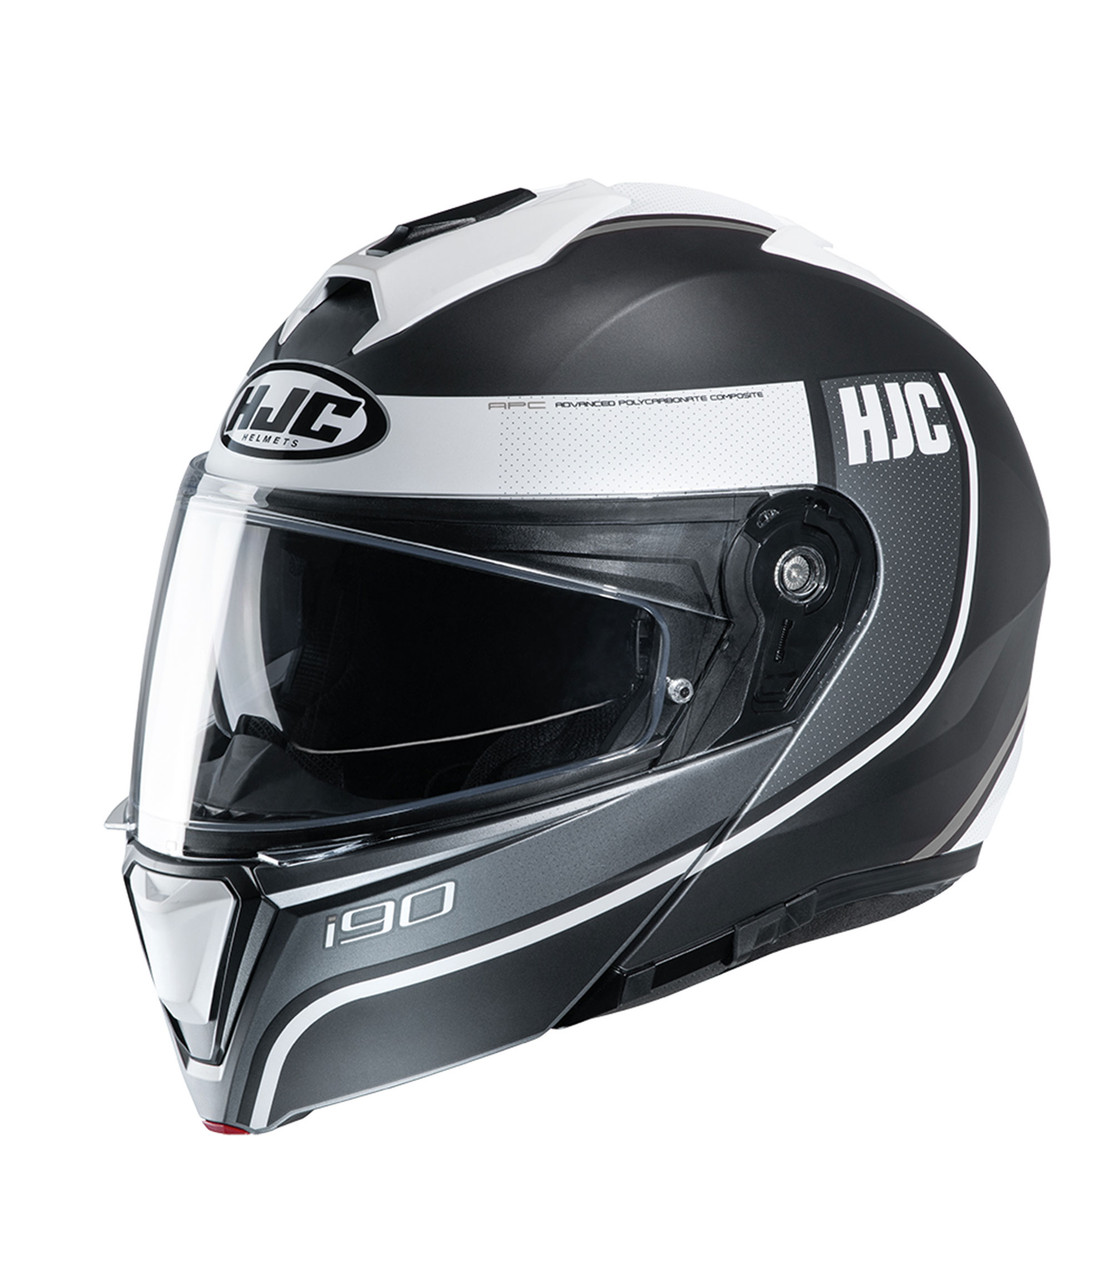 Image of Hjc I-90 Davan Flip Front Motorcycle Helmet White